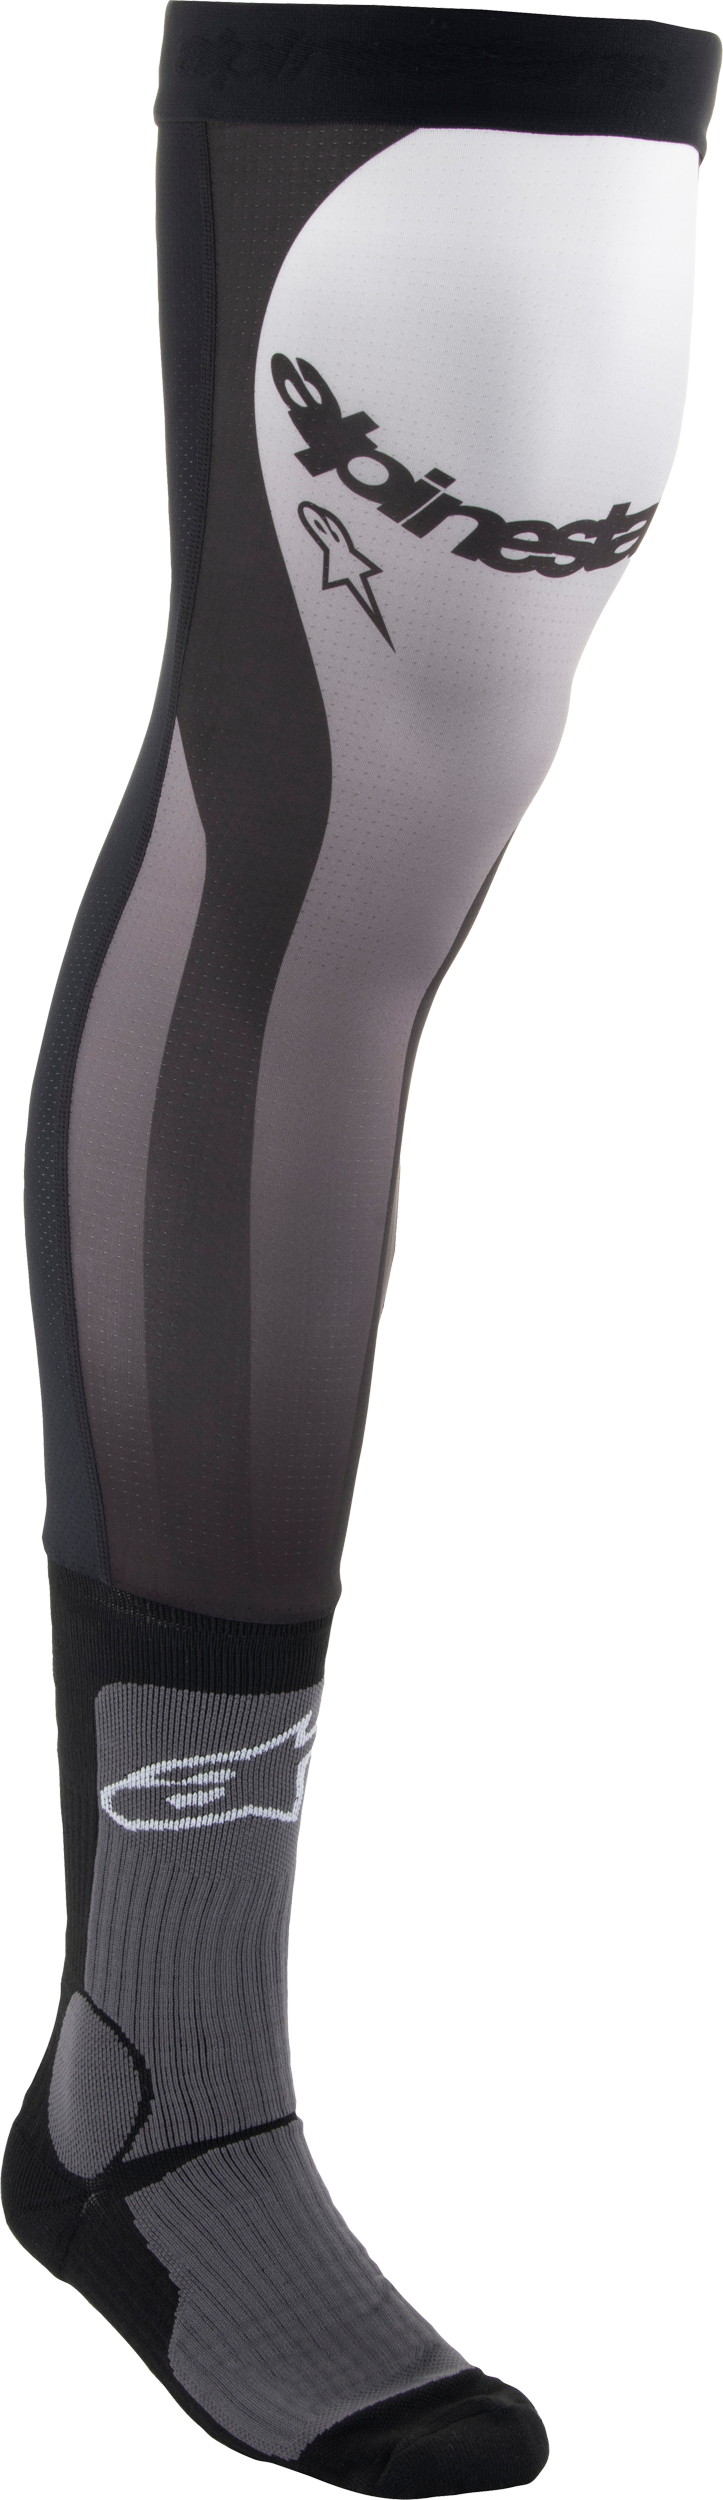 ALPINESTARS Knee Brace Socks Black/White Sm/Md 4701324-12-S/M